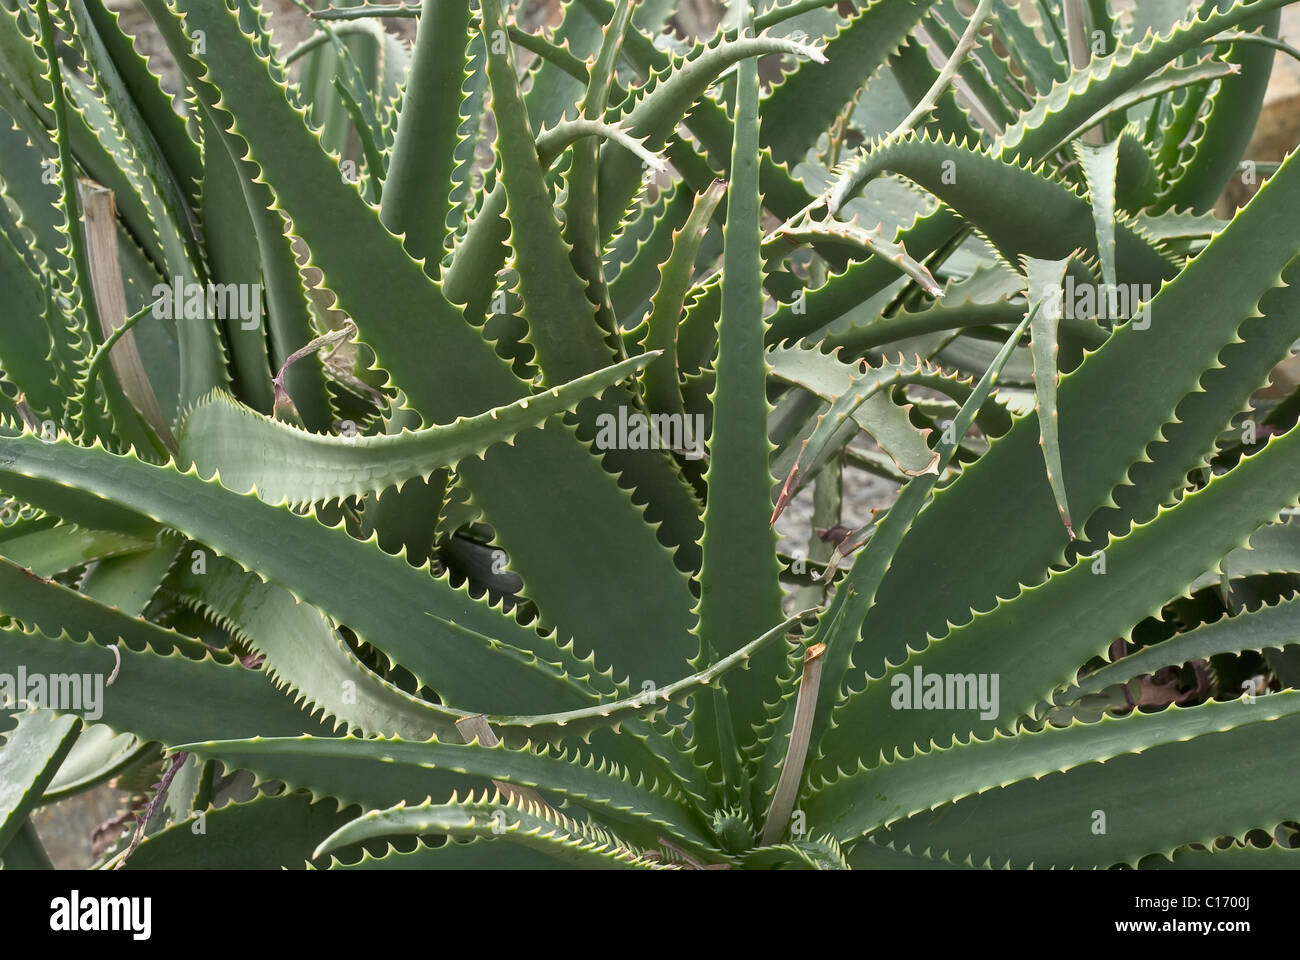 Aloe Plant used in Healthcare and Medicine Stock Photo